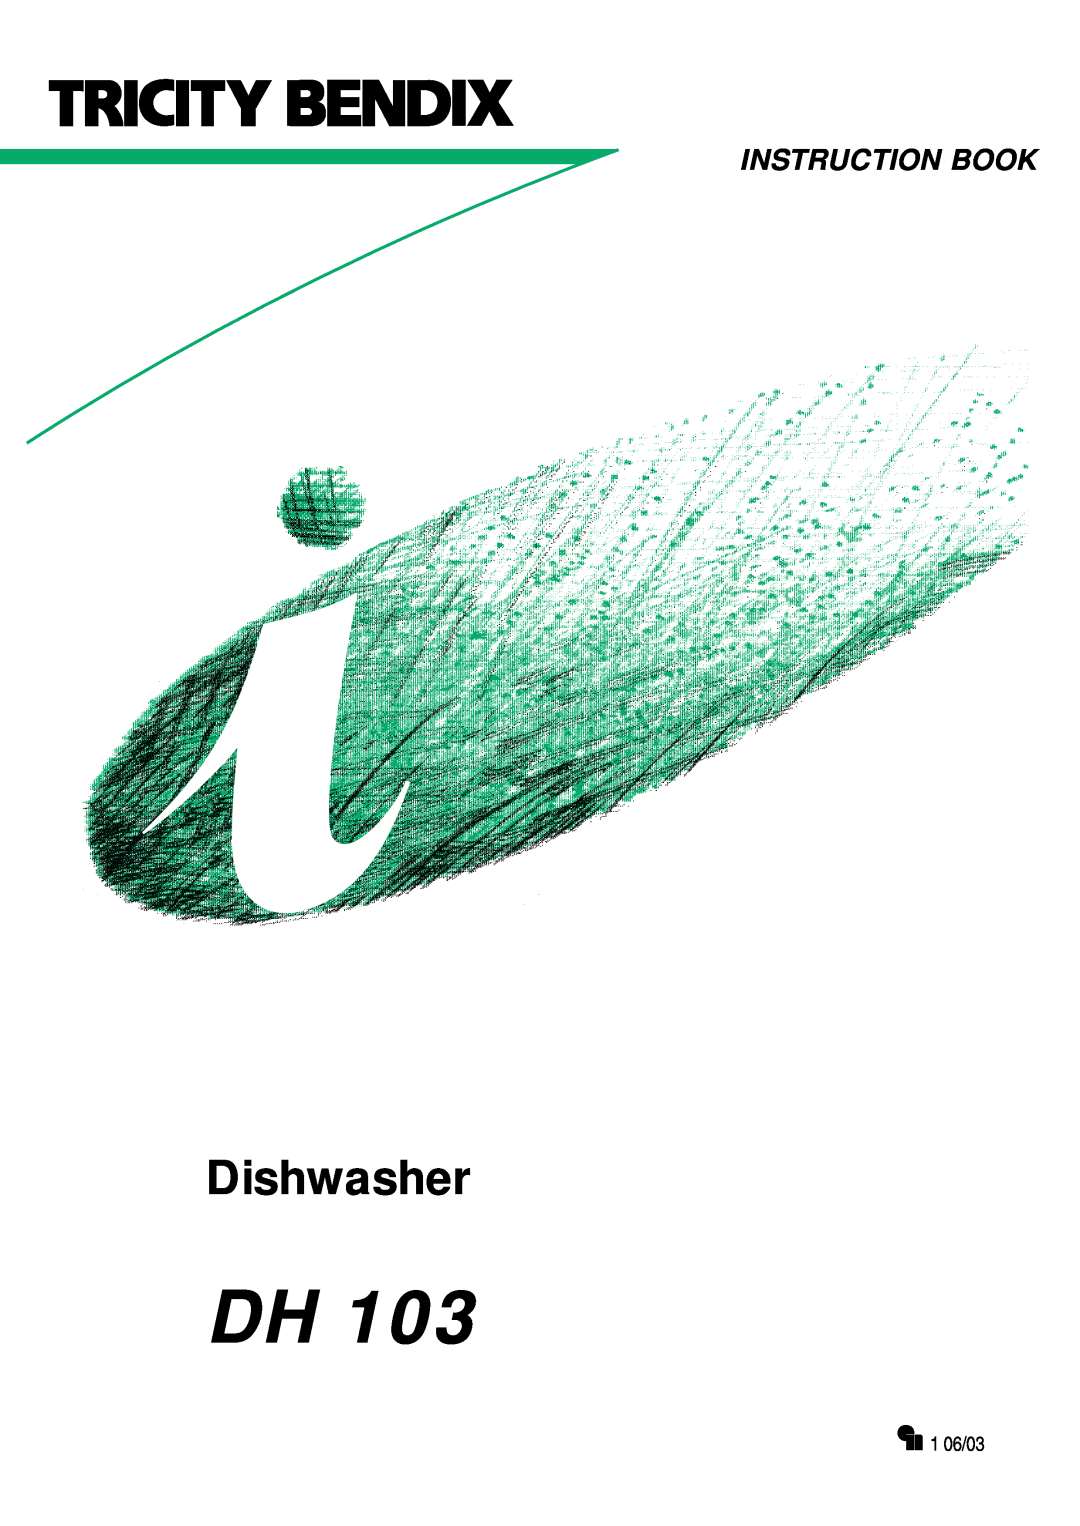 Tricity Bendix DH 103 manual 1 06/03, Dishwasher, Instruction Book 